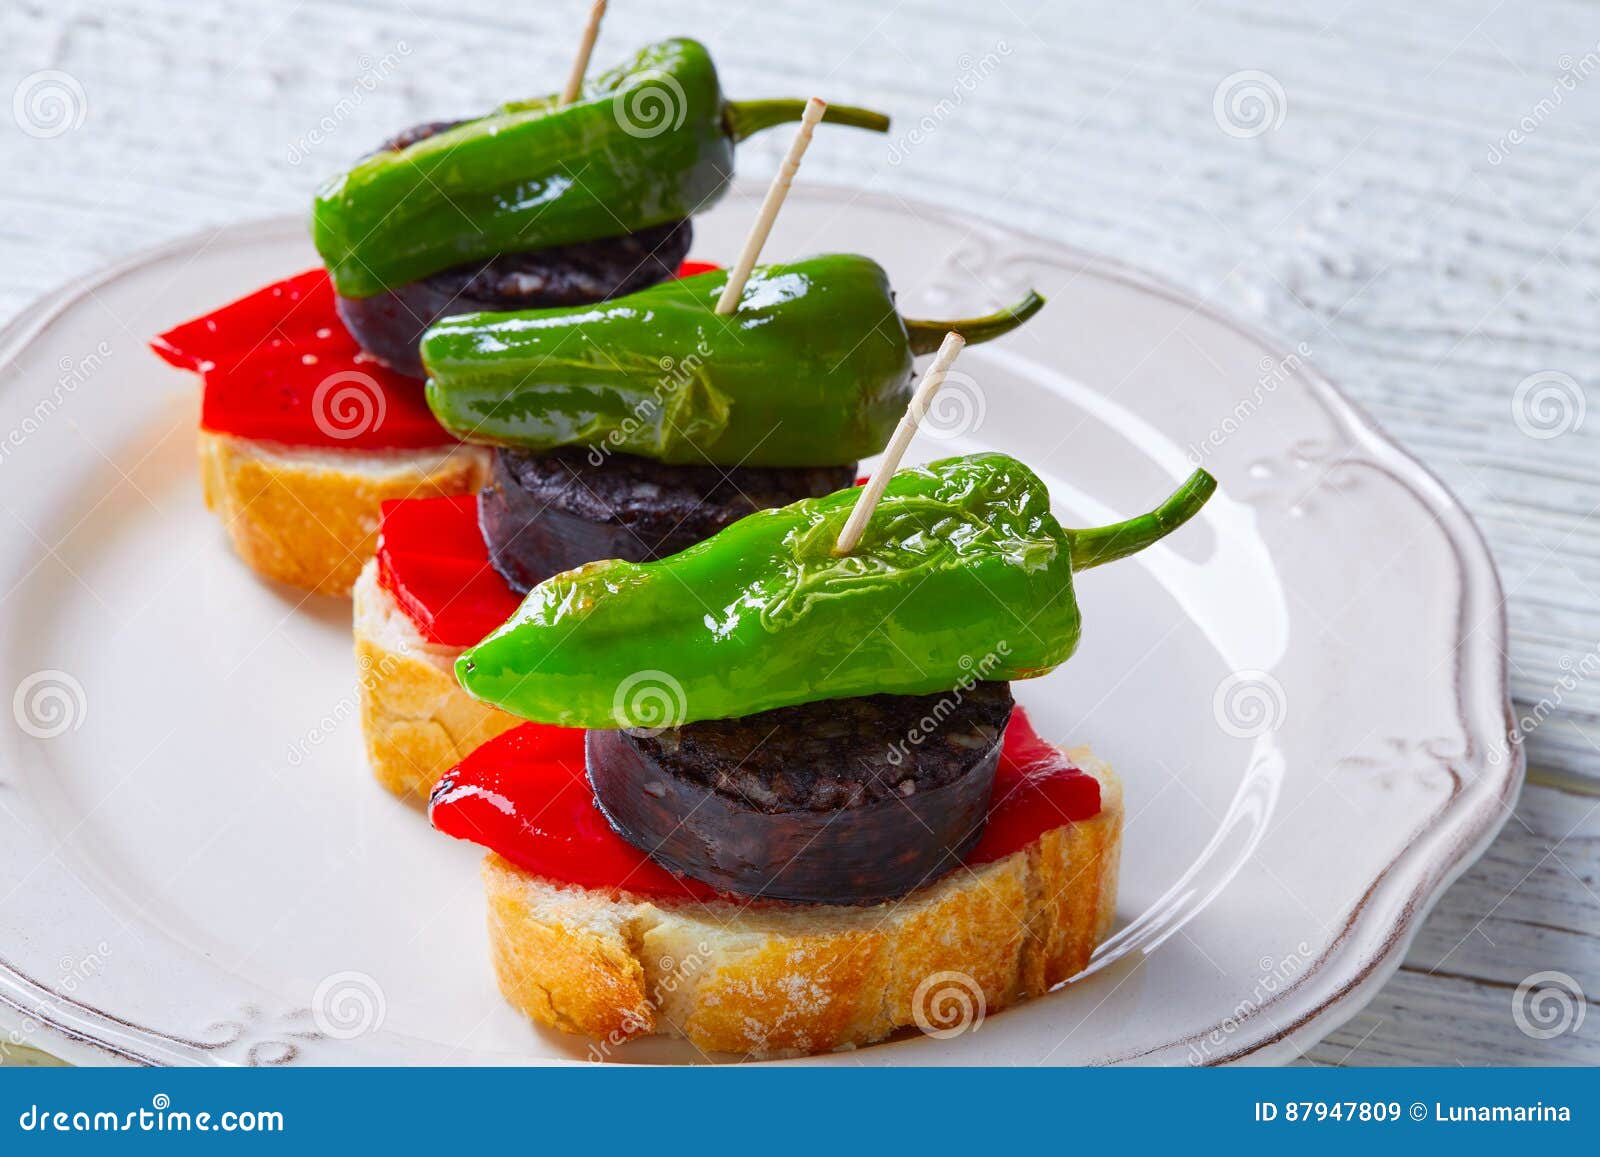 pinchos burgos morcilla with padron pepper